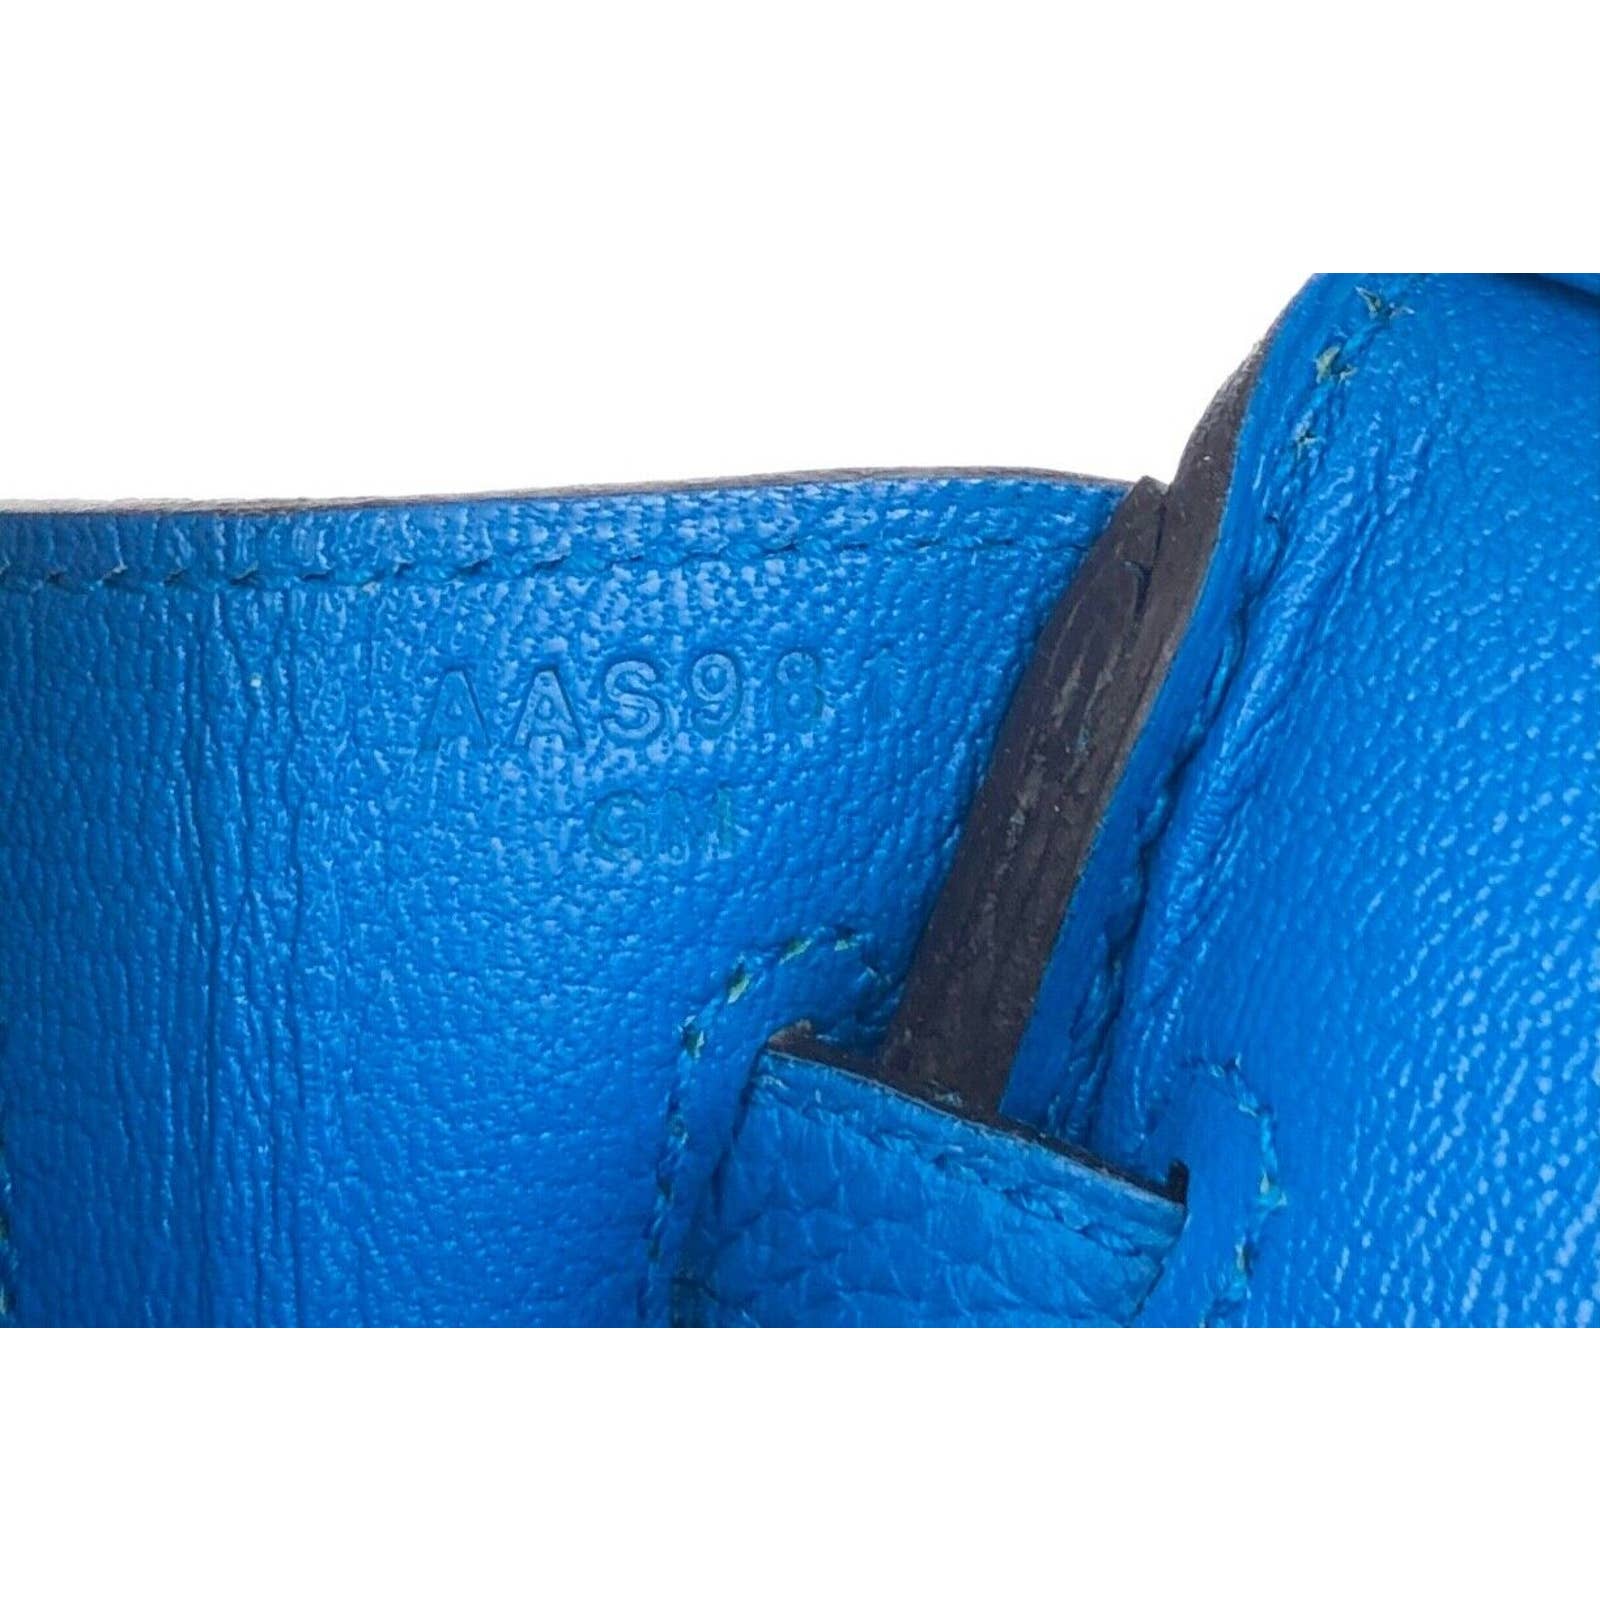 Hermès Birkin 25 Top Handle Bag In Bleu Zanzibar Togo With Gold